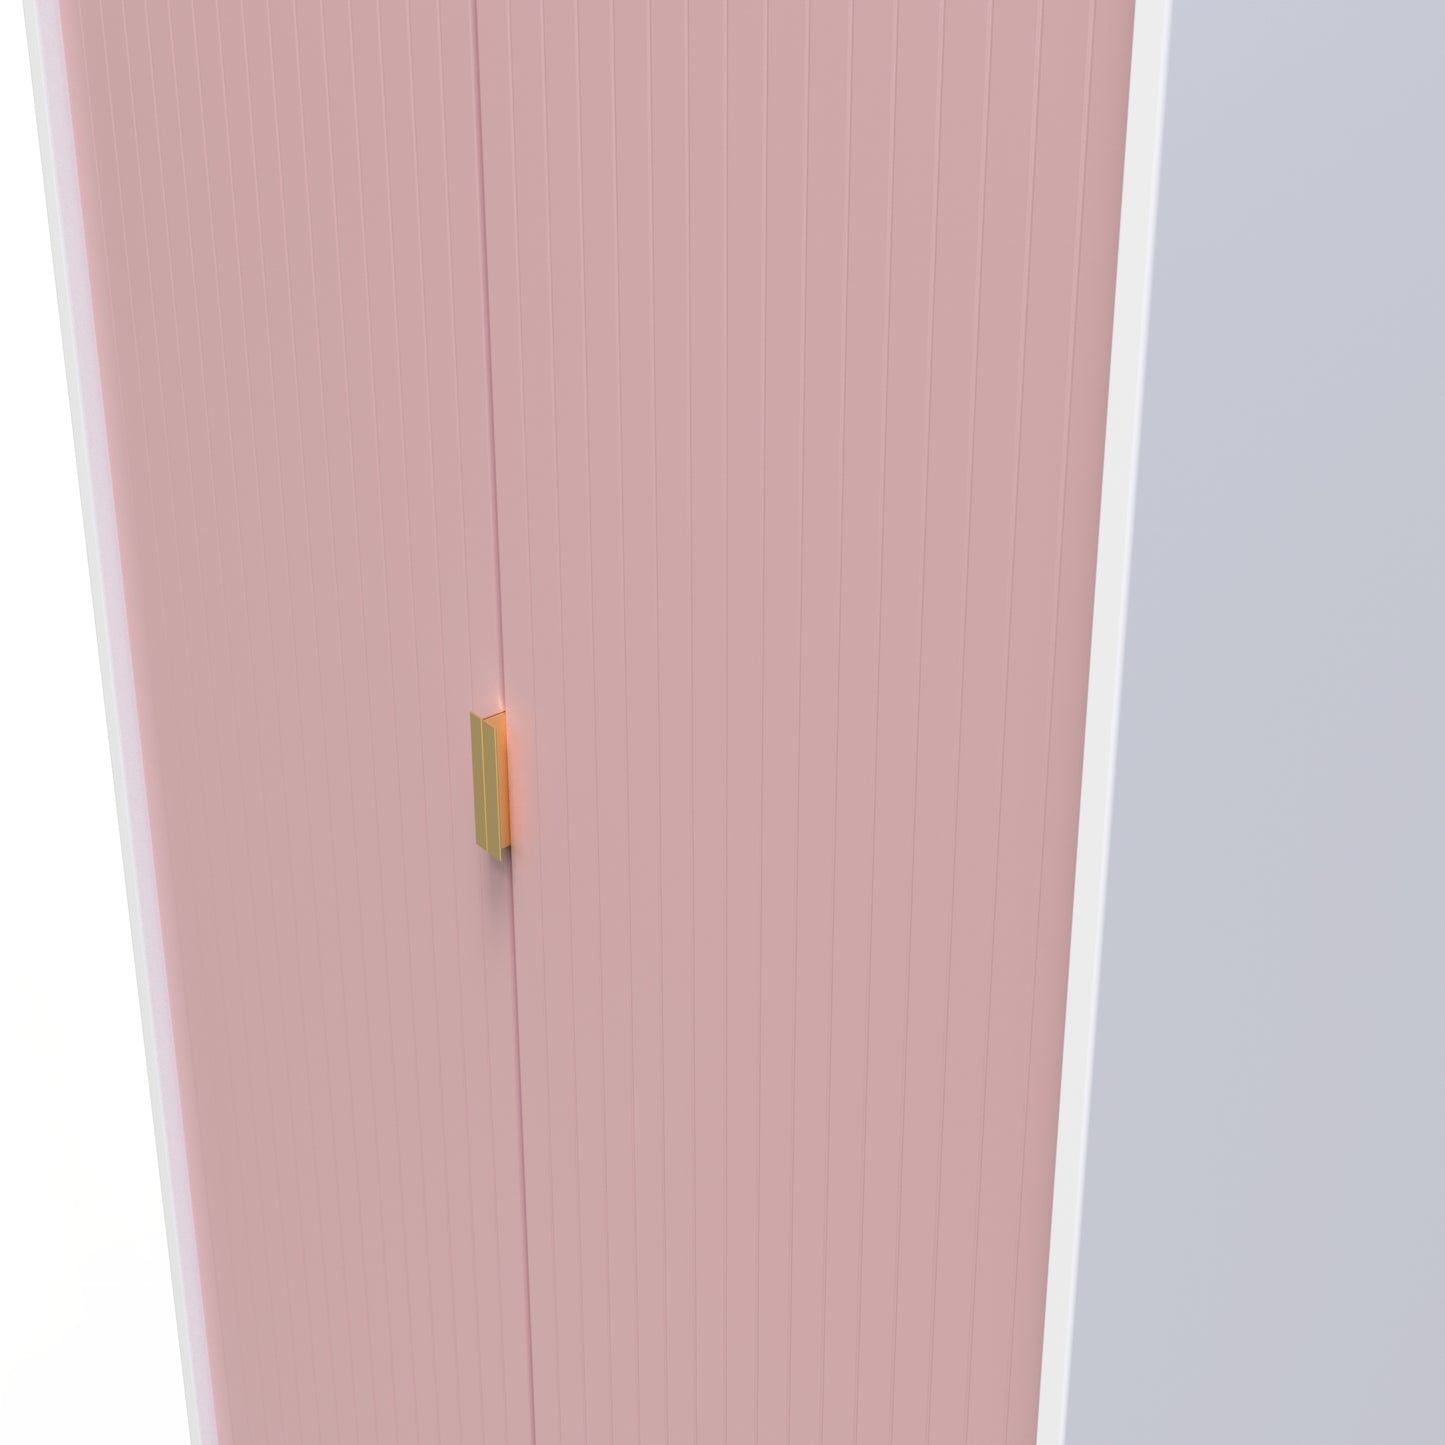 Linear Tall Plain 2 door Wardrobe Mixed colour